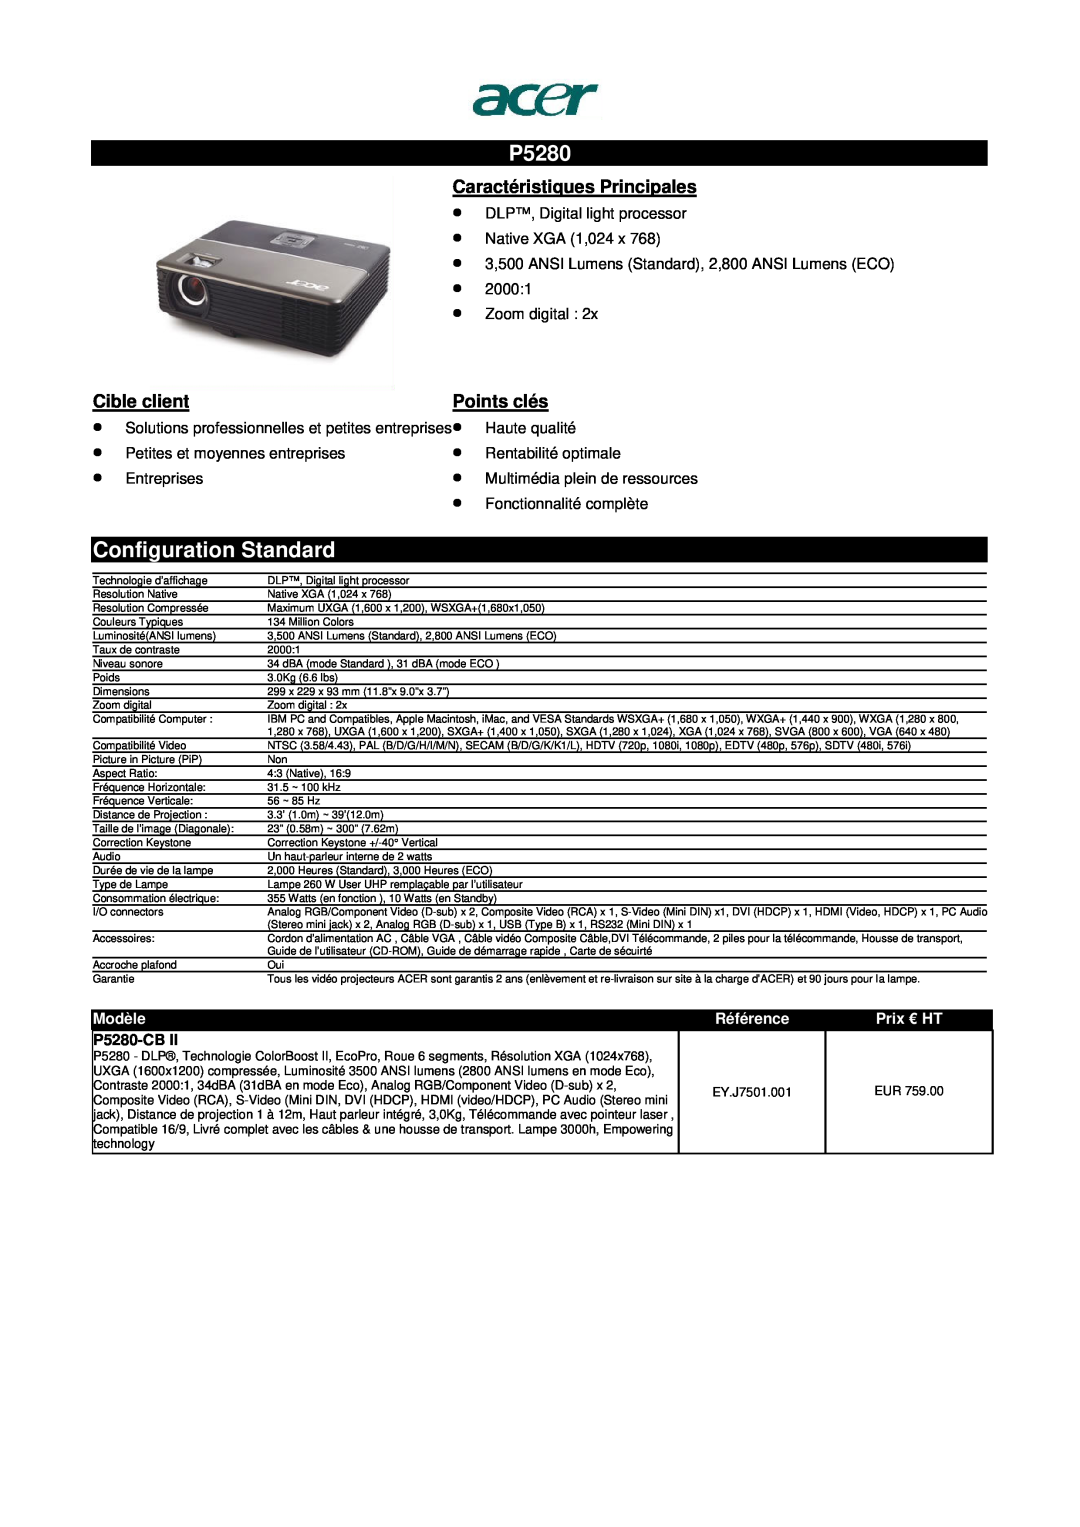 Acer S1200 P5280, 3,500 ANSI Lumens Standard, 2,800 ANSI Lumens ECO Zoom digital, Haute qualité, Rentabilité optimale 